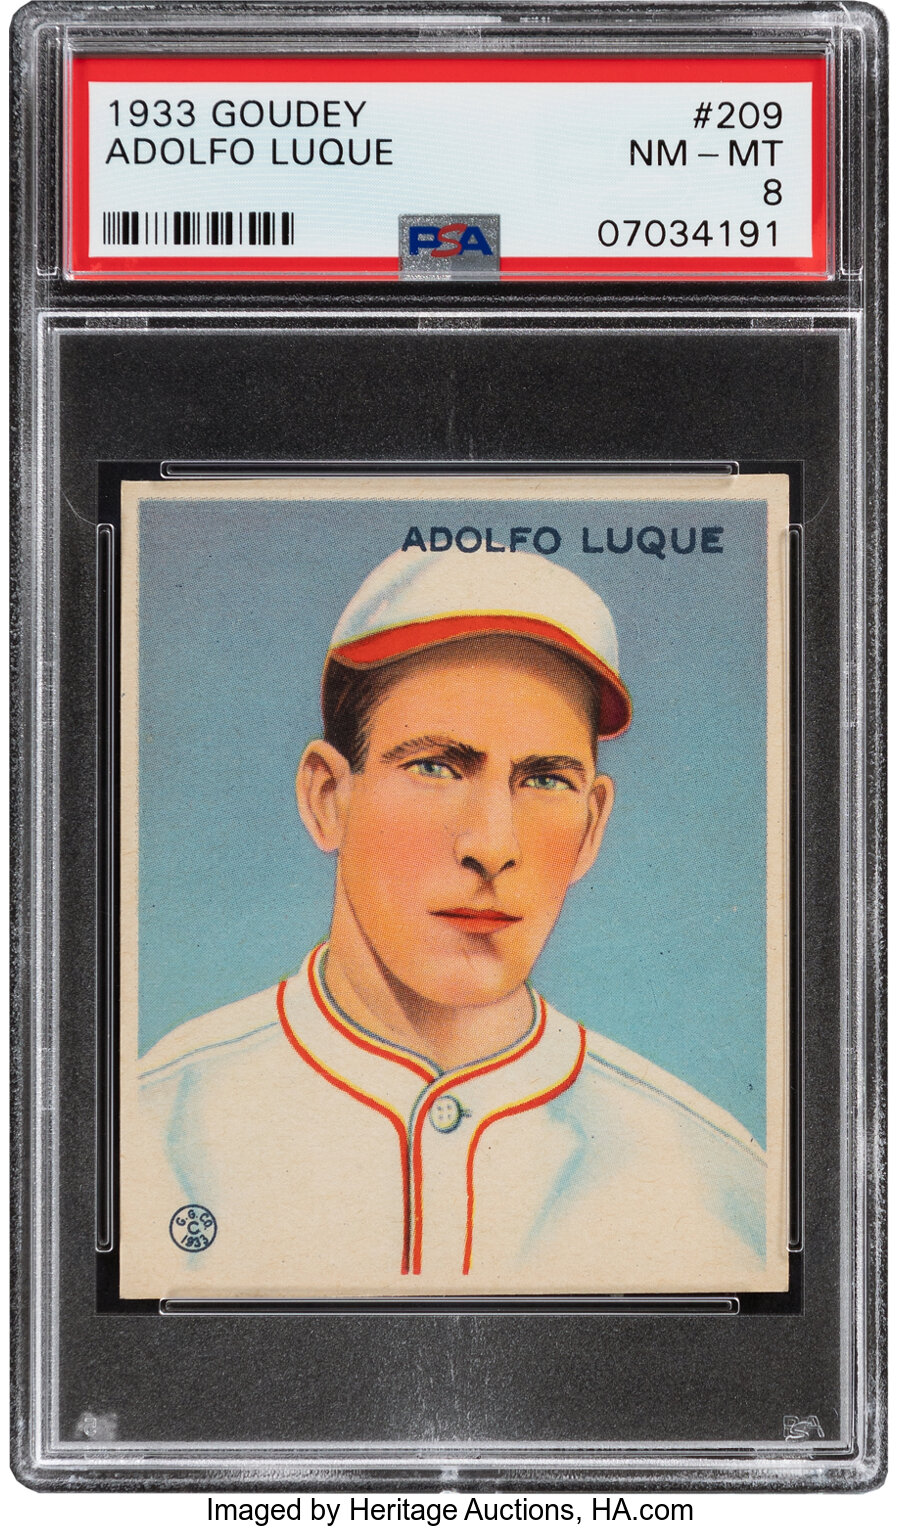 1933 Goudey Adolfo Luque #209 PSA NM-MT 8